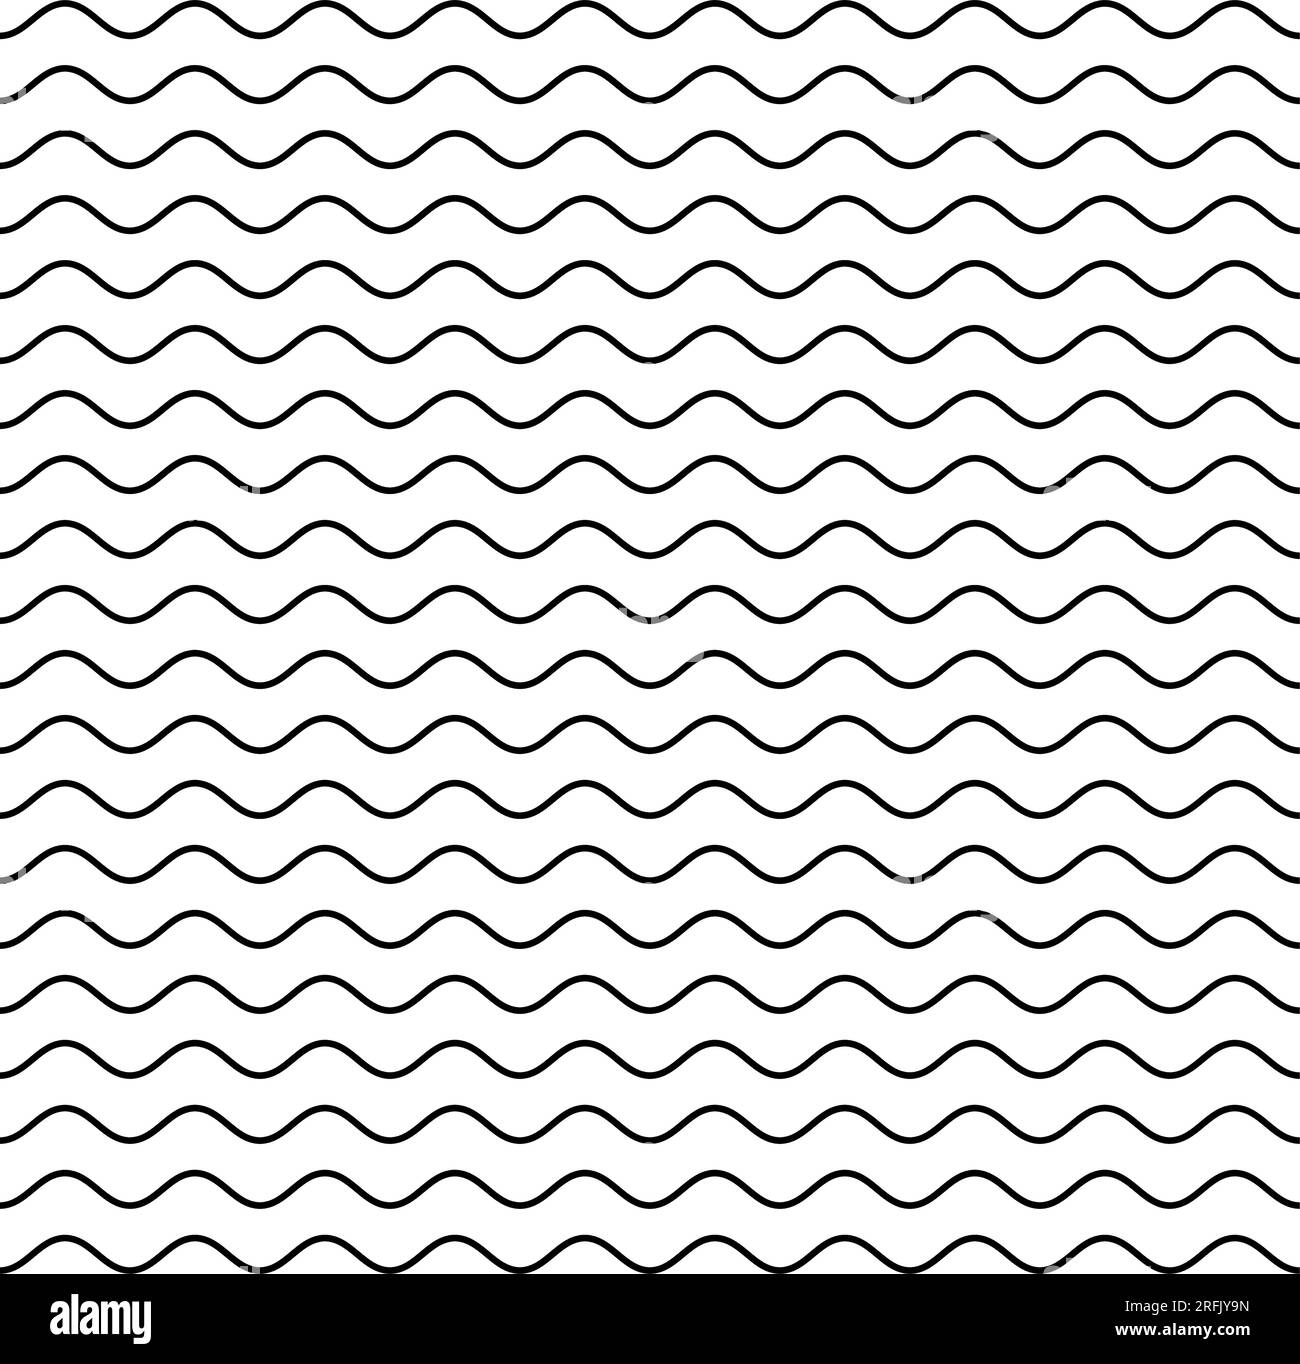 Wave line seamless pattern. Wavy thin stripes pattern. Black